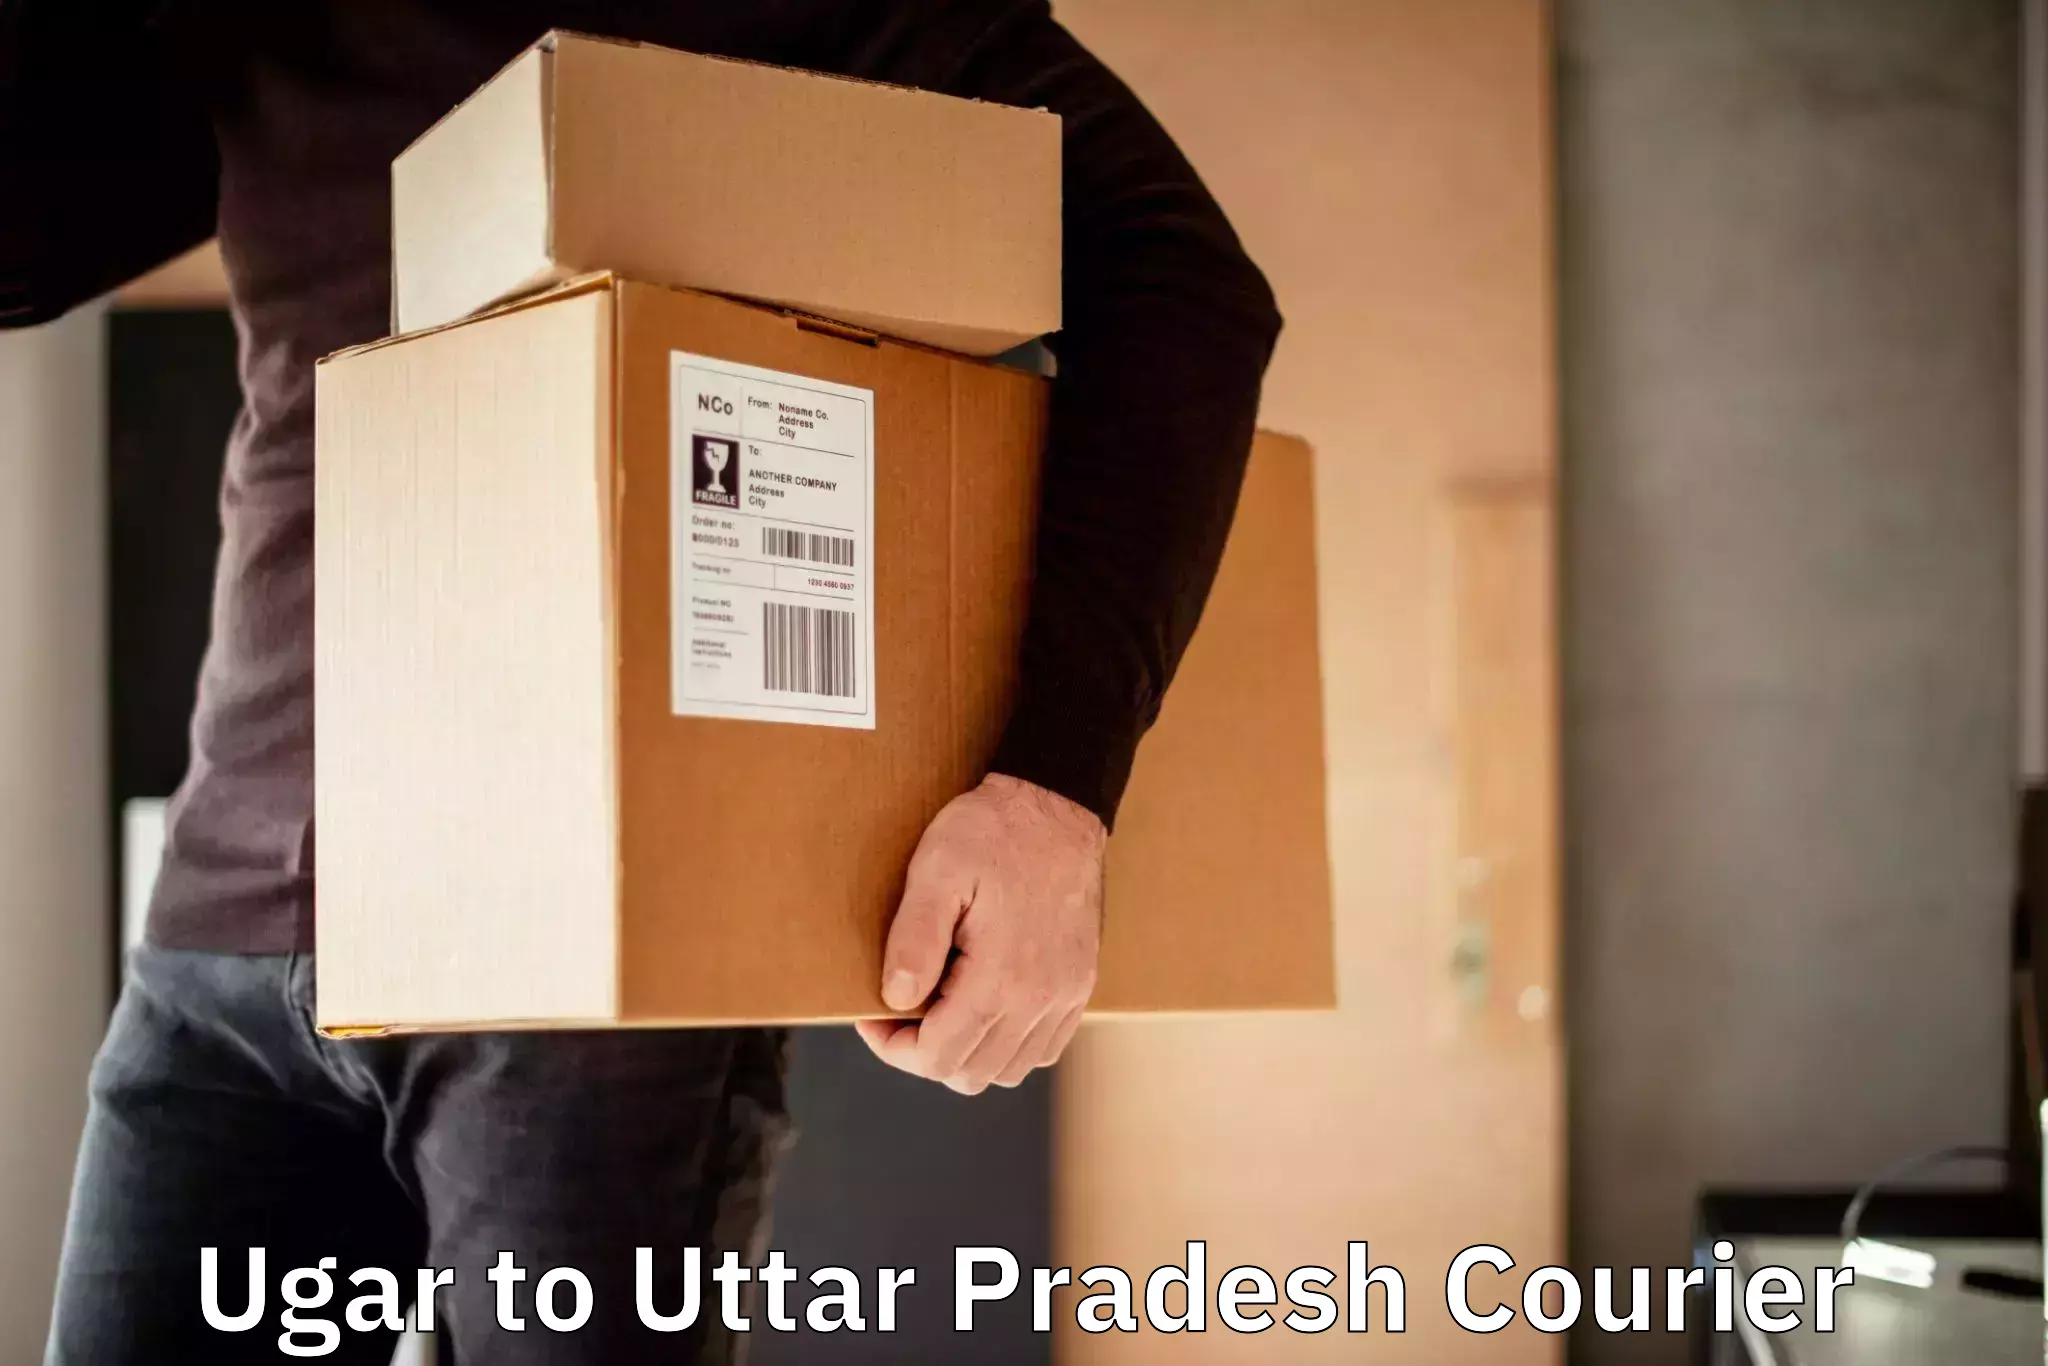 Local delivery service Ugar to Uttar Pradesh